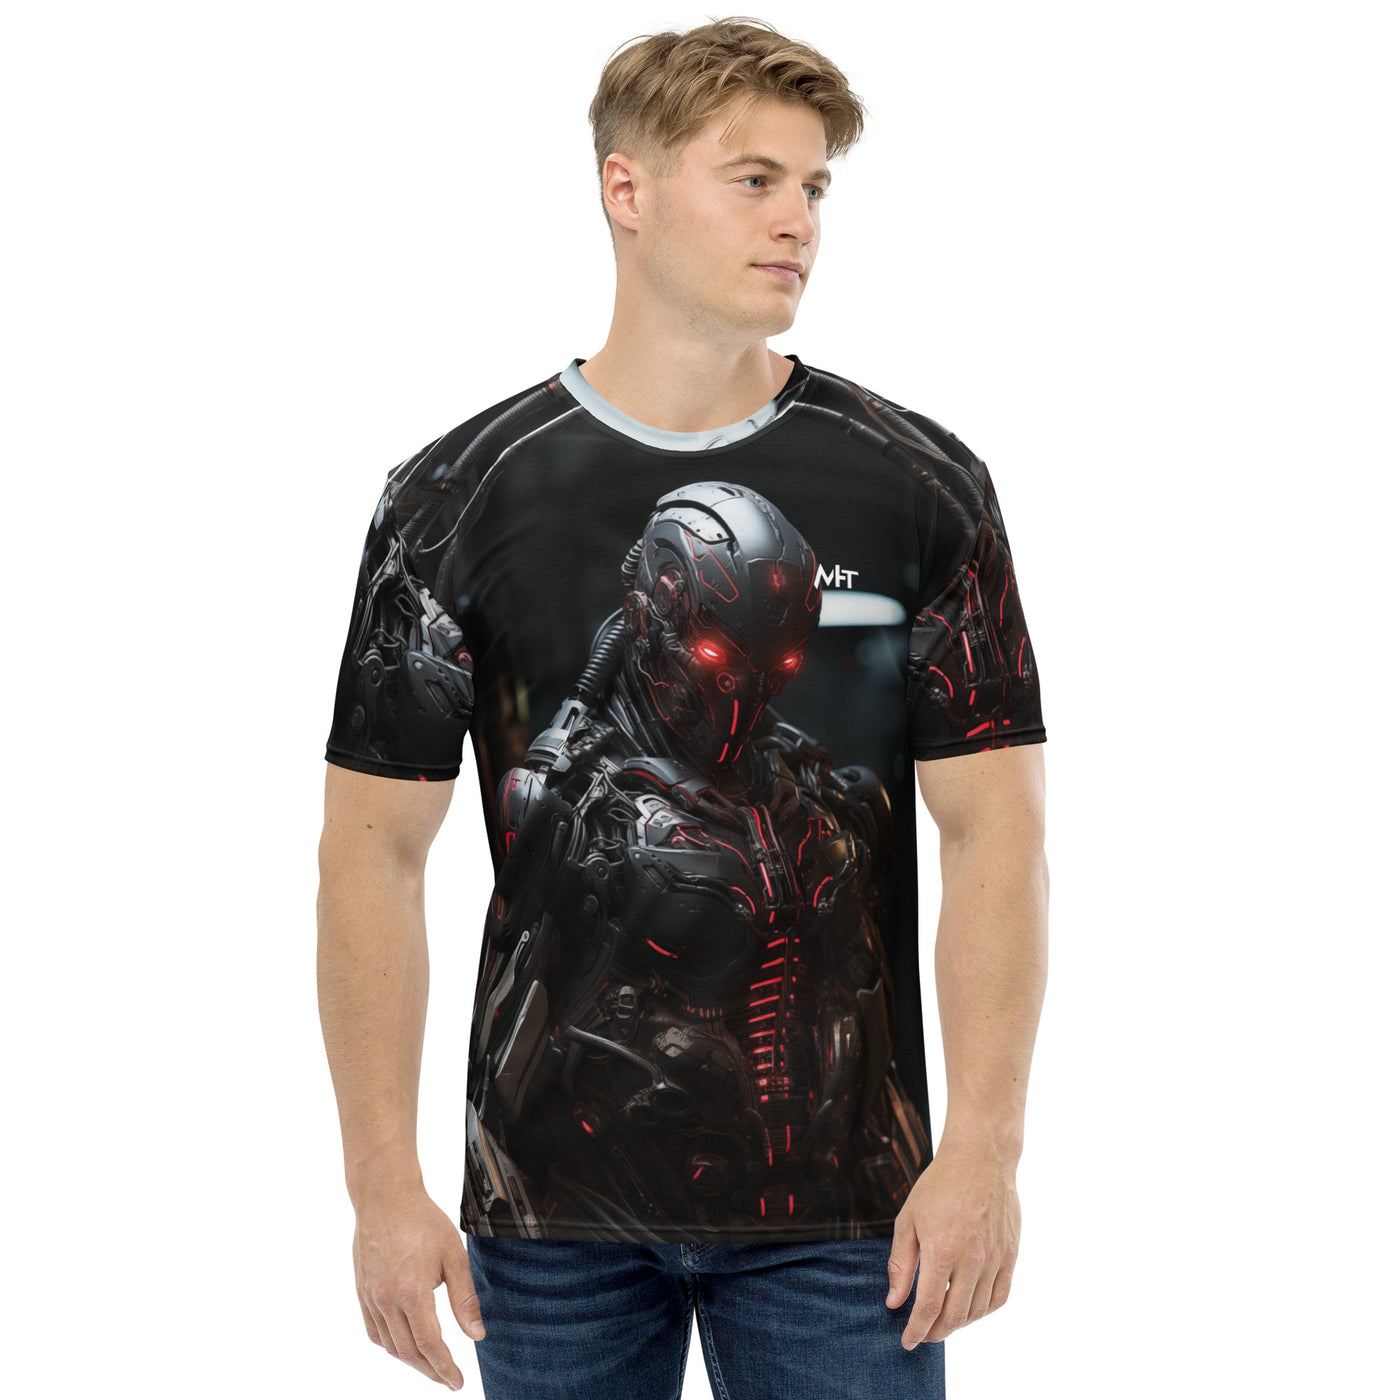 CyberArms Warrior v39 - Men's t-shirt